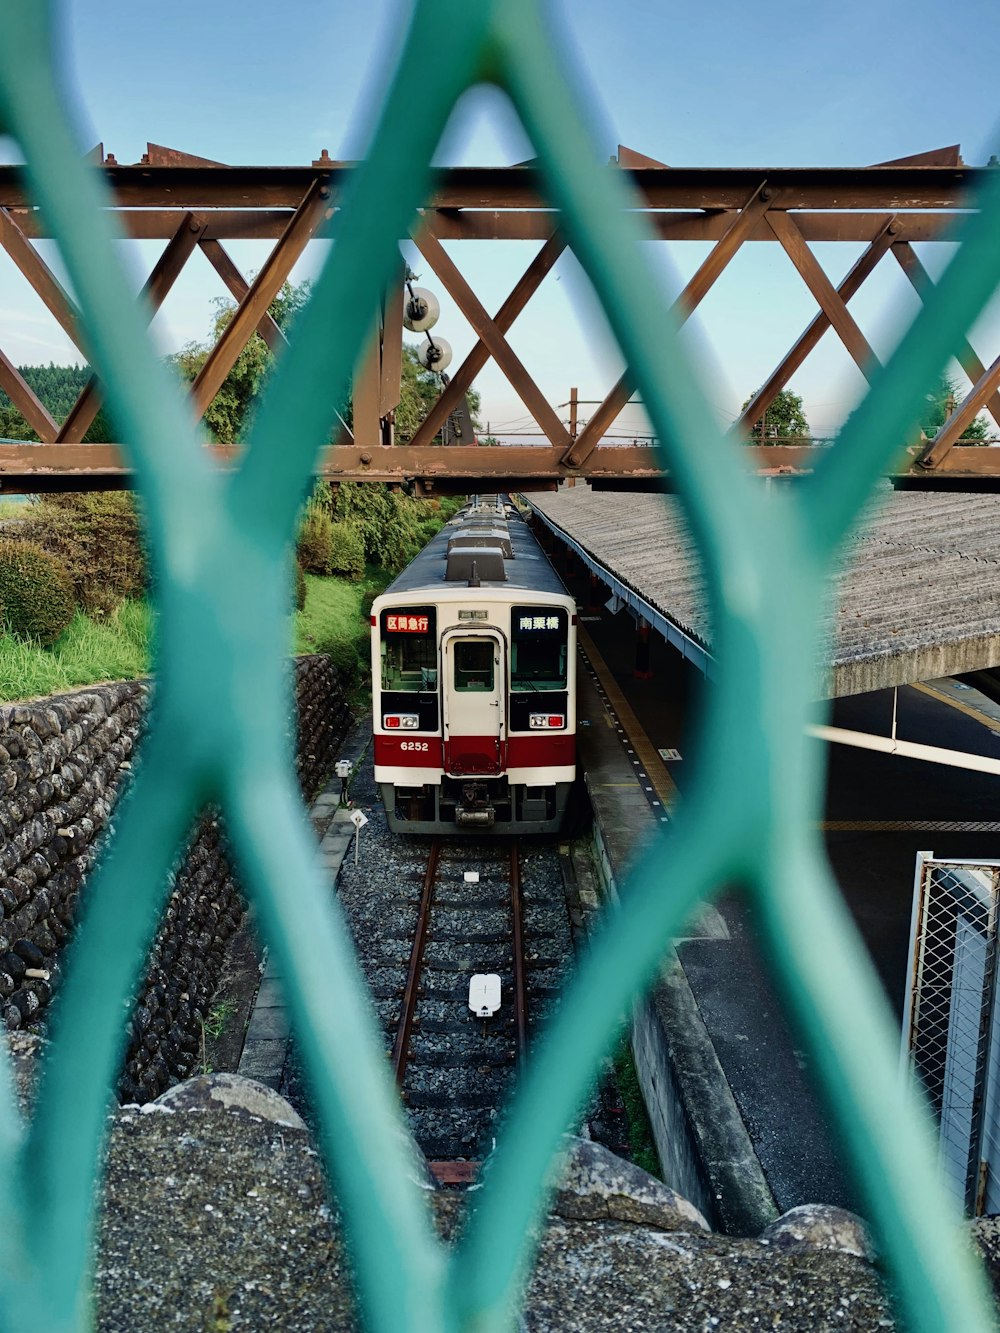 white and multicolored train under red metal bridge